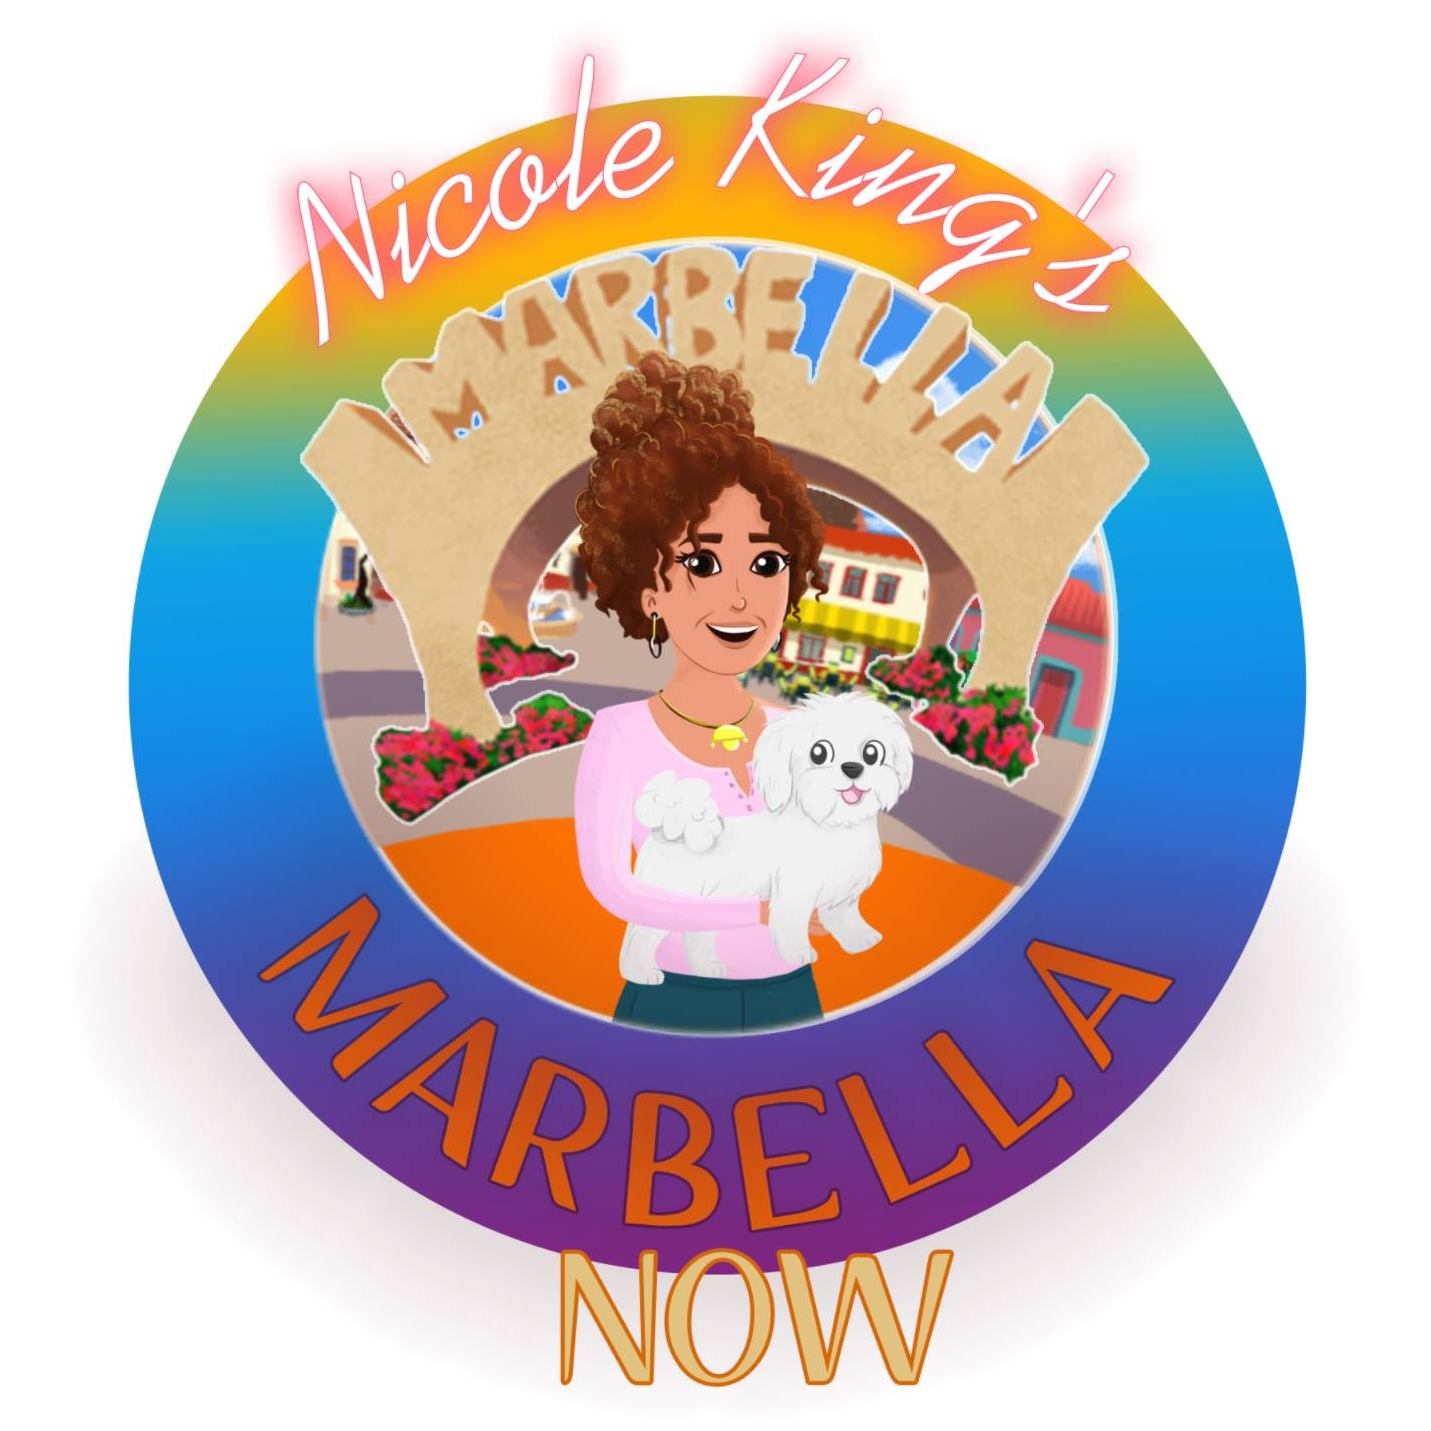 RTV Marbella Now